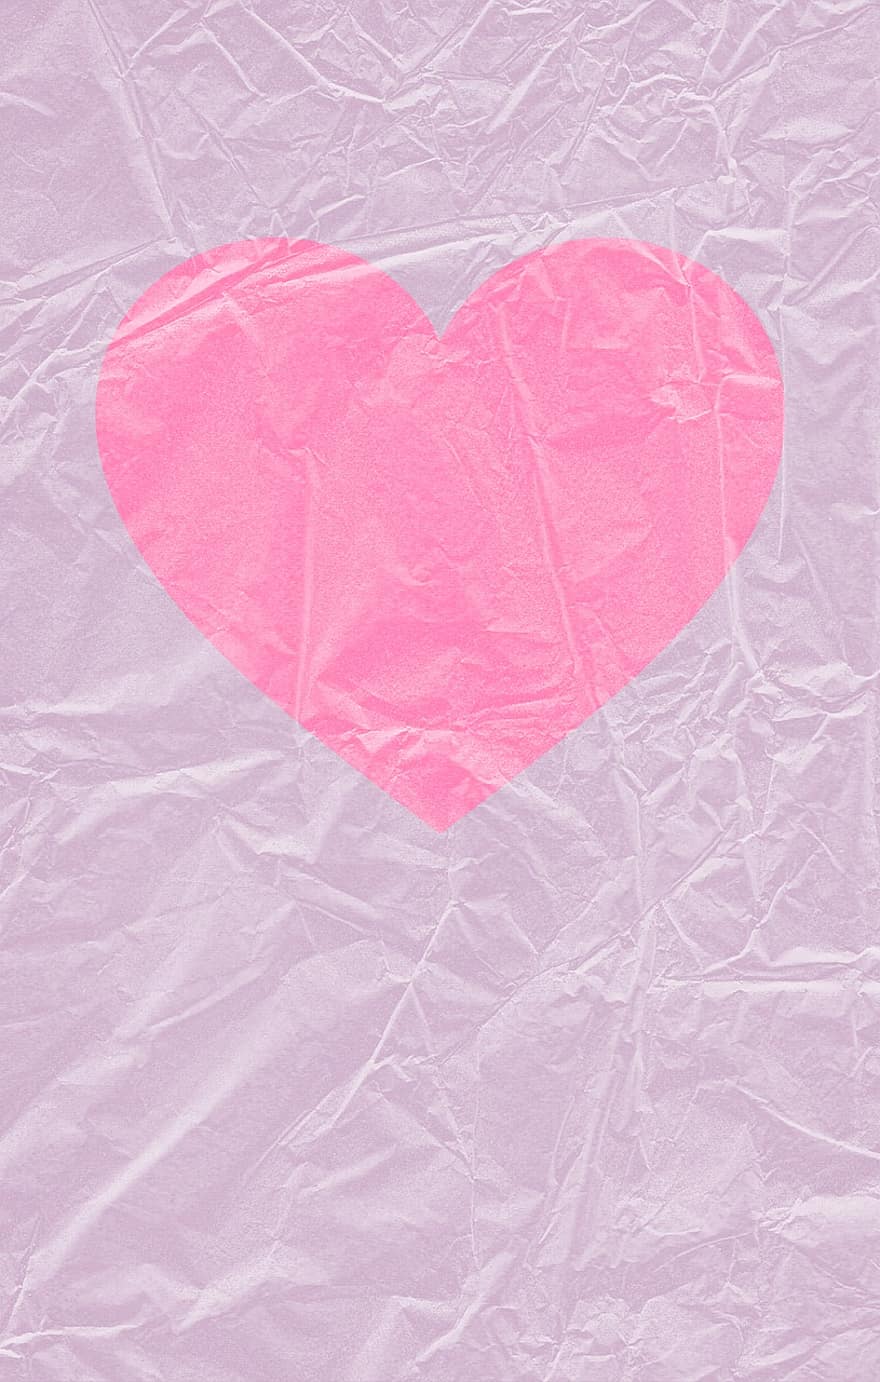 jantung, kusut, Latar Belakang, kertas, cinta, berwarna merah muda, tekstur, melipat, latar belakang, bentuk hati, abstrak